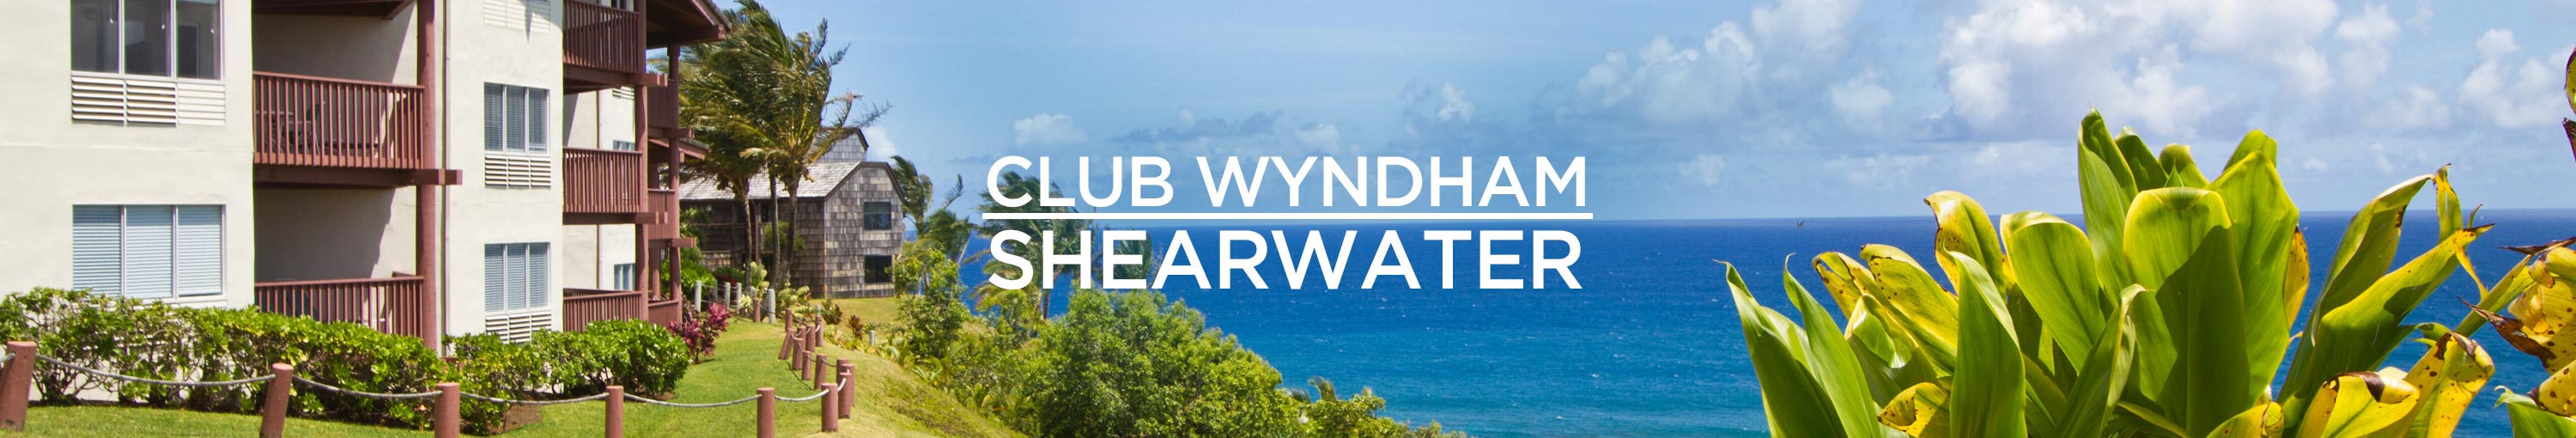 Club Wyndham Shearwater from Extra Holidays